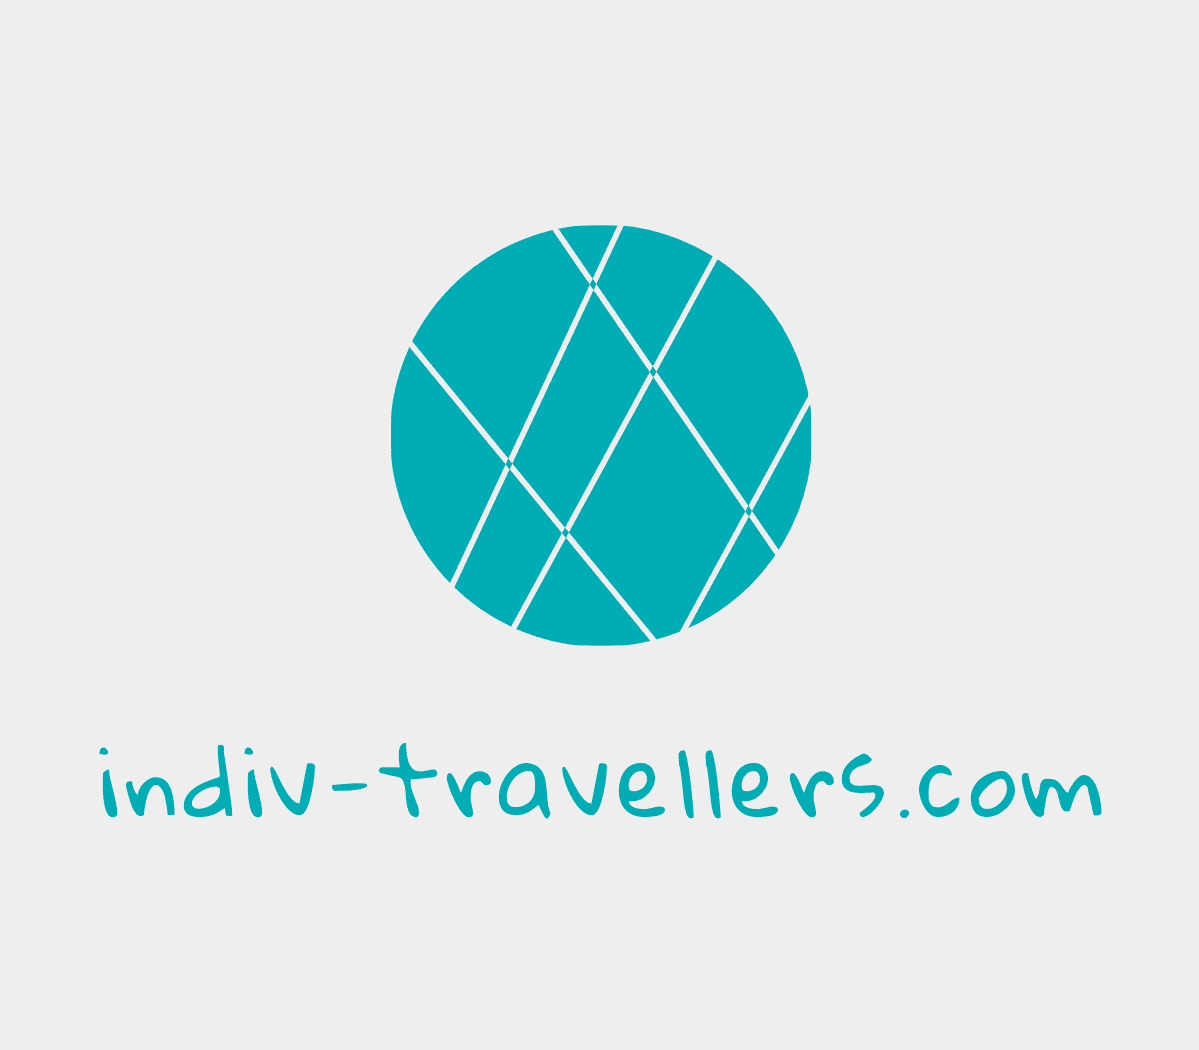 indiv-travellers.com